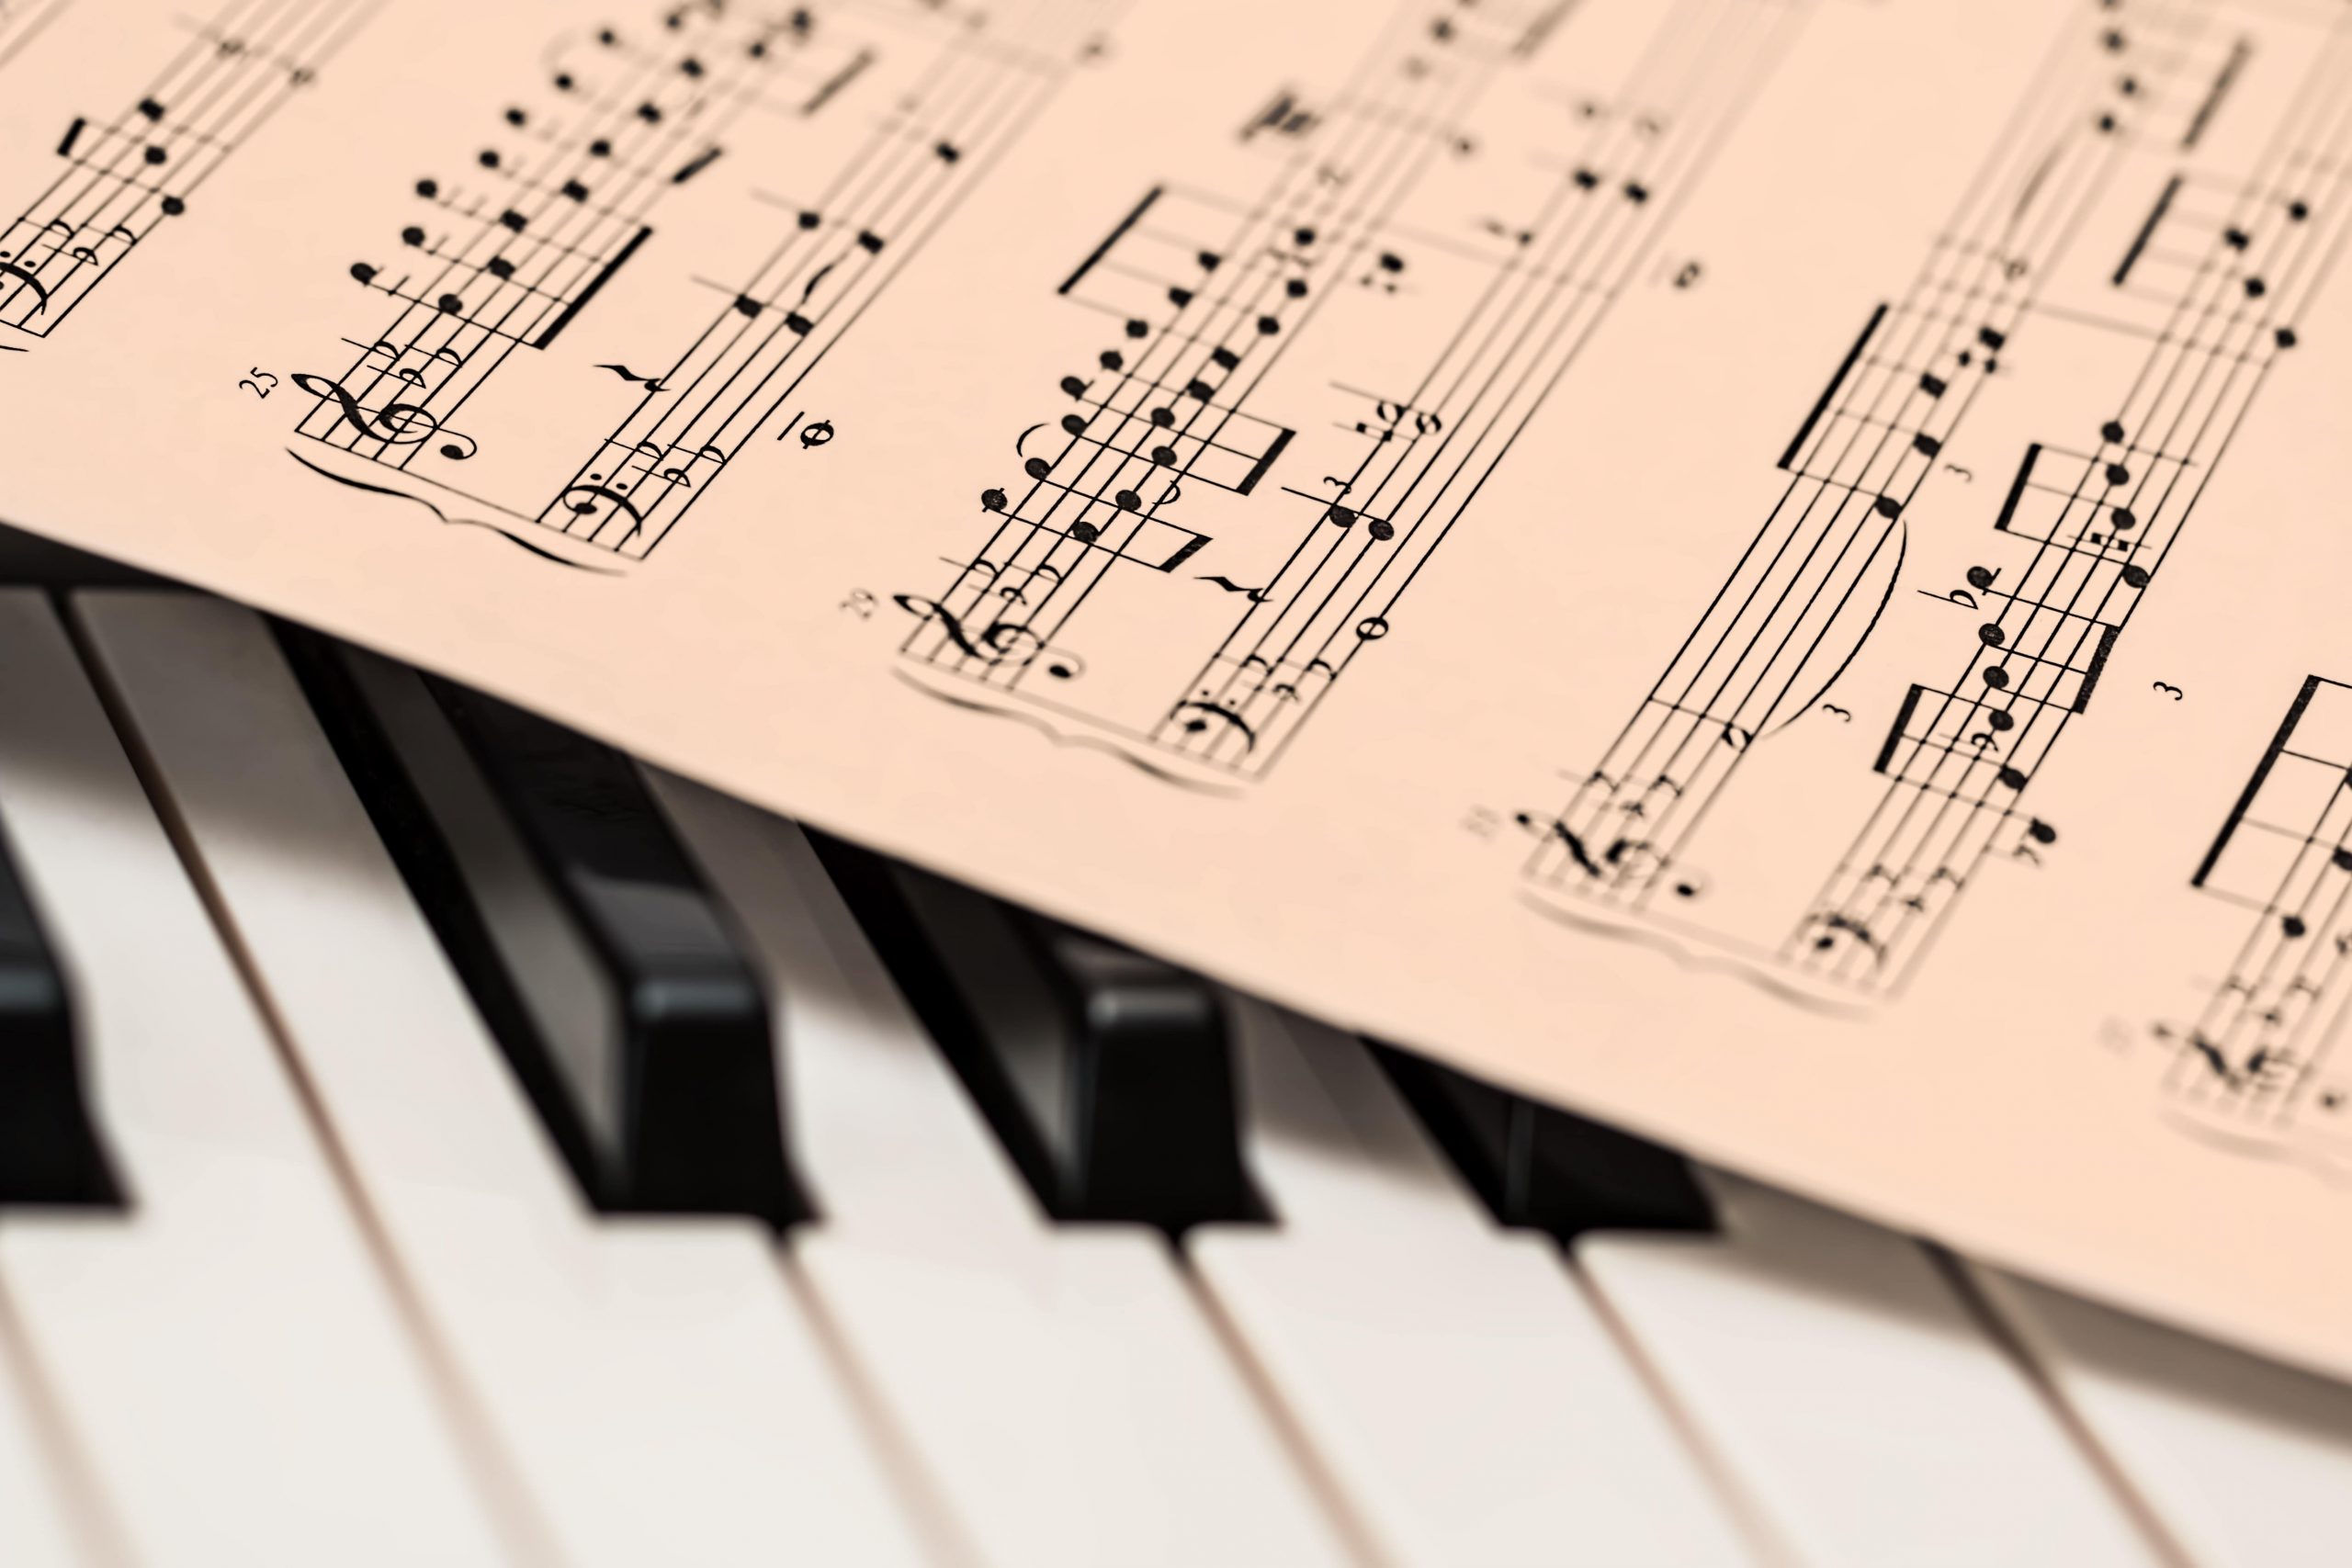 A sheet of music on piano keys